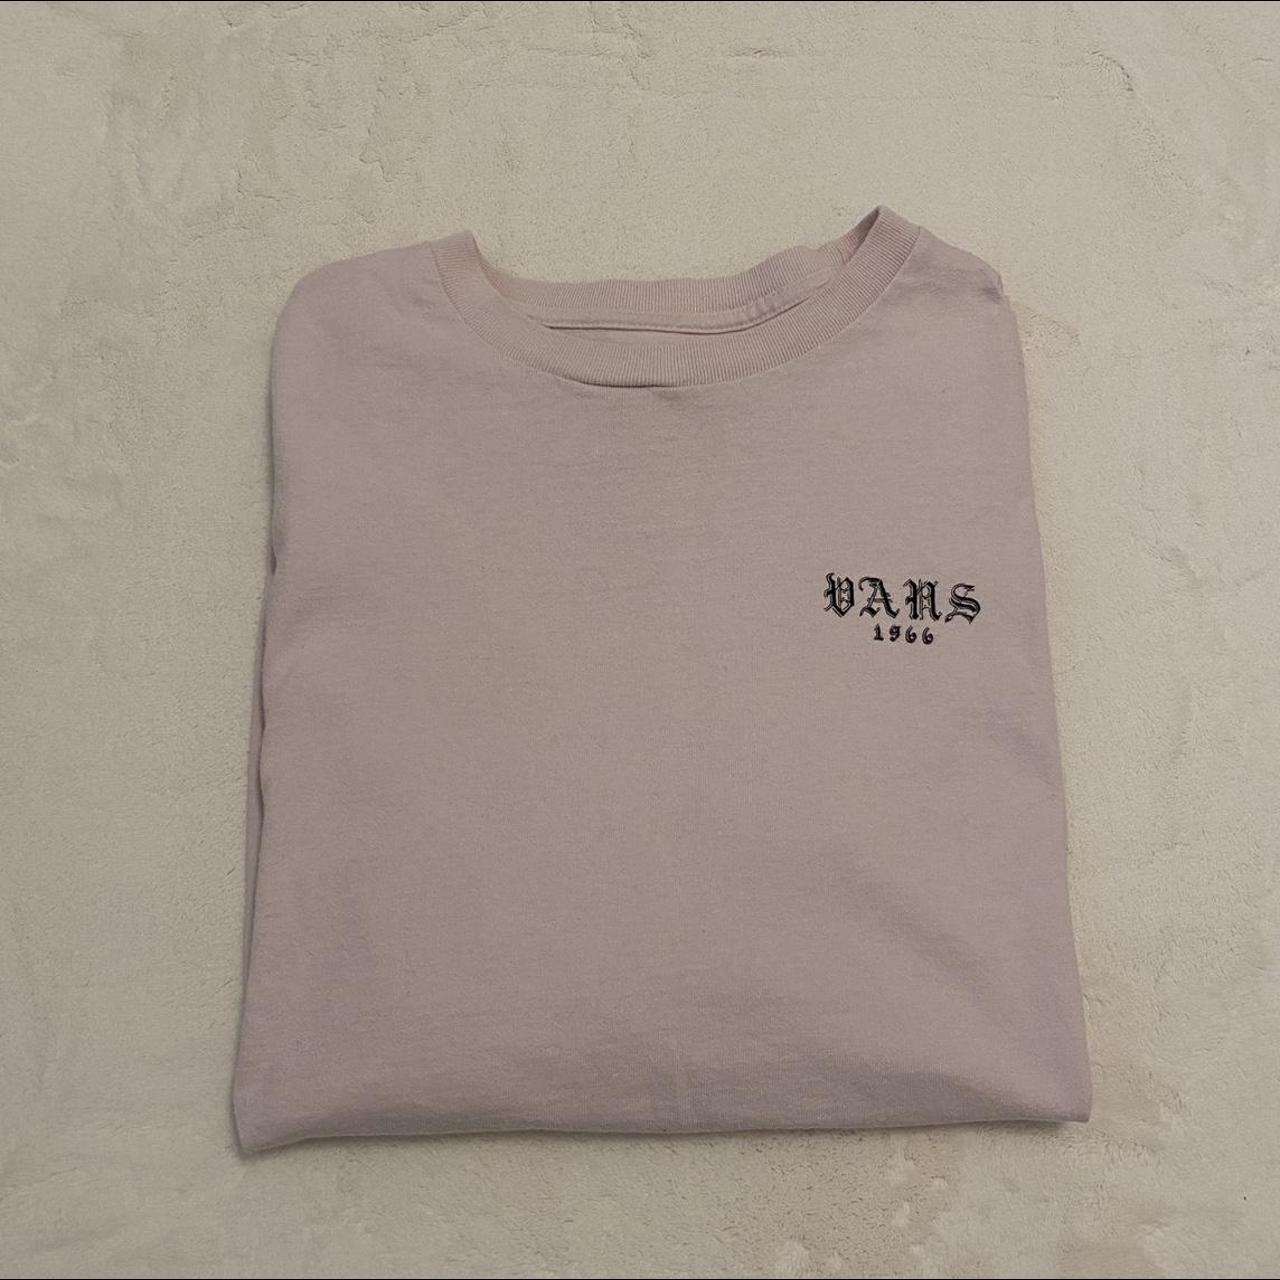 Vans Women's Pink Shirt